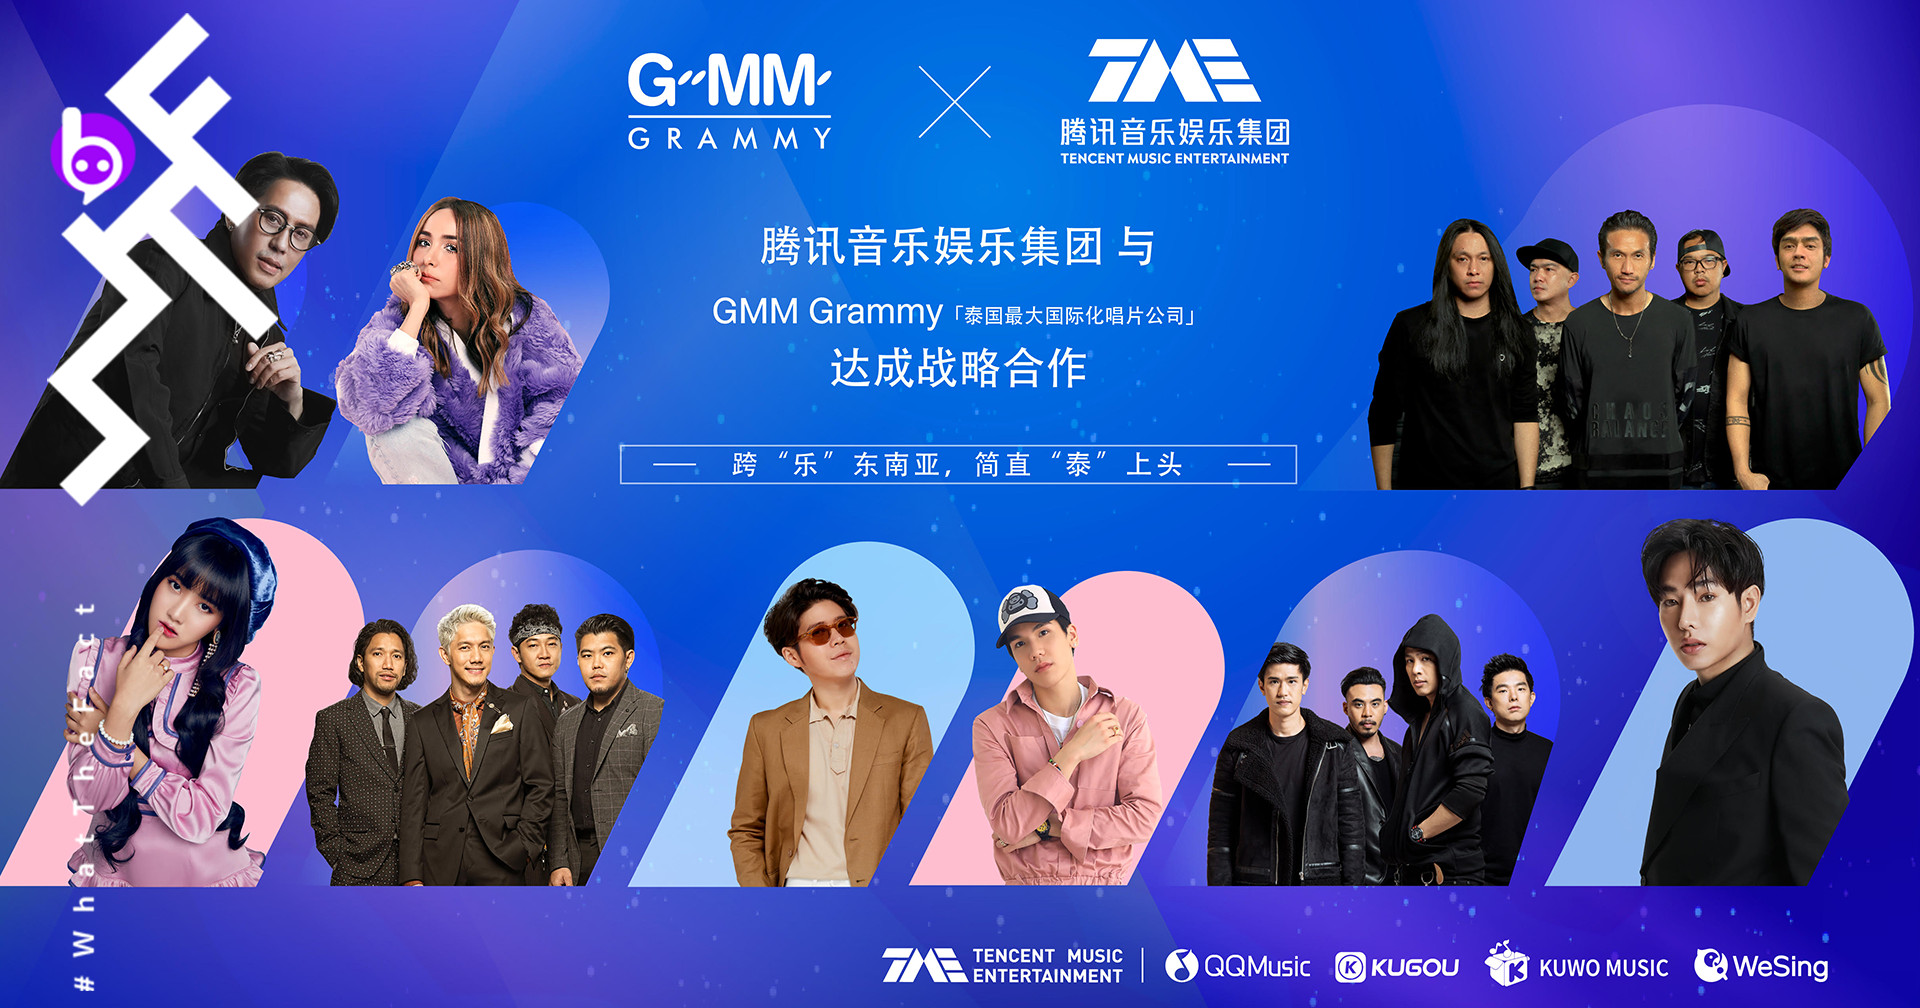 GMM Music ประกาศความร่วมมือ Tencent Music Entertainment Group บุกตลาดจีน!